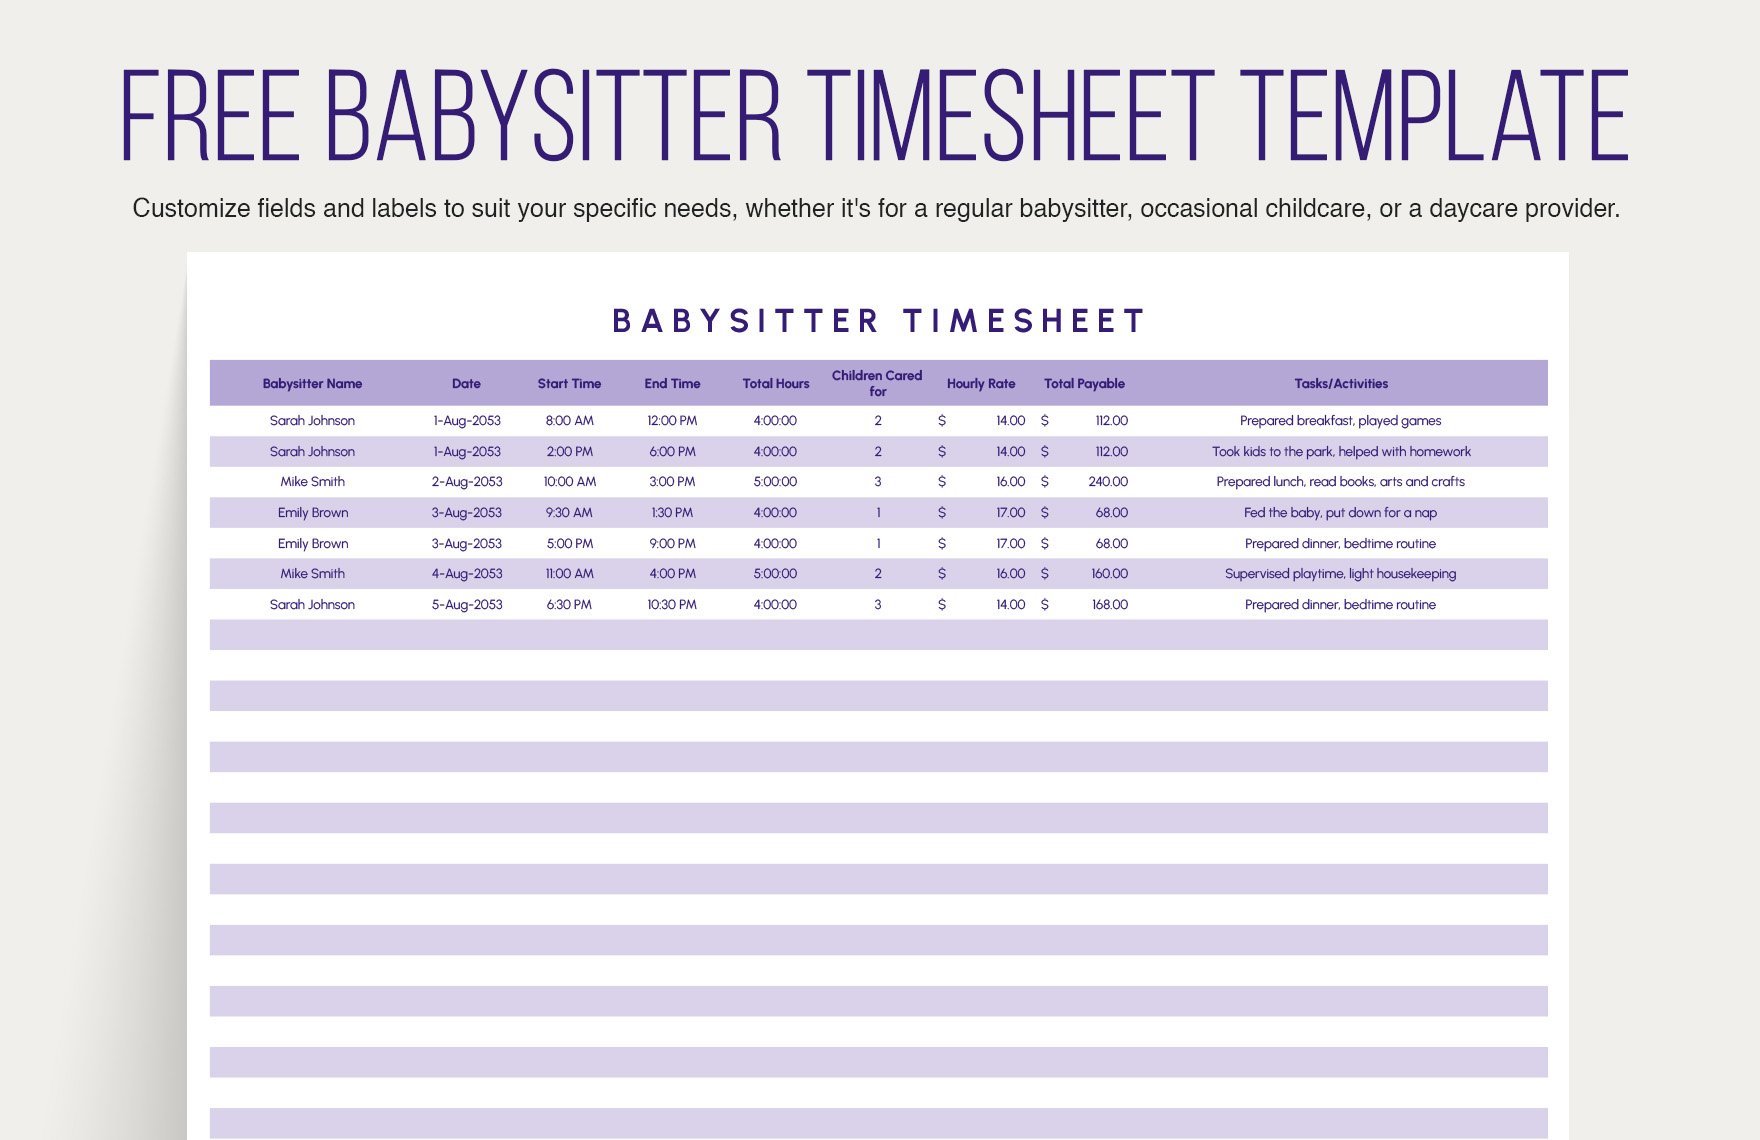 Free Babysitter Timesheet Template